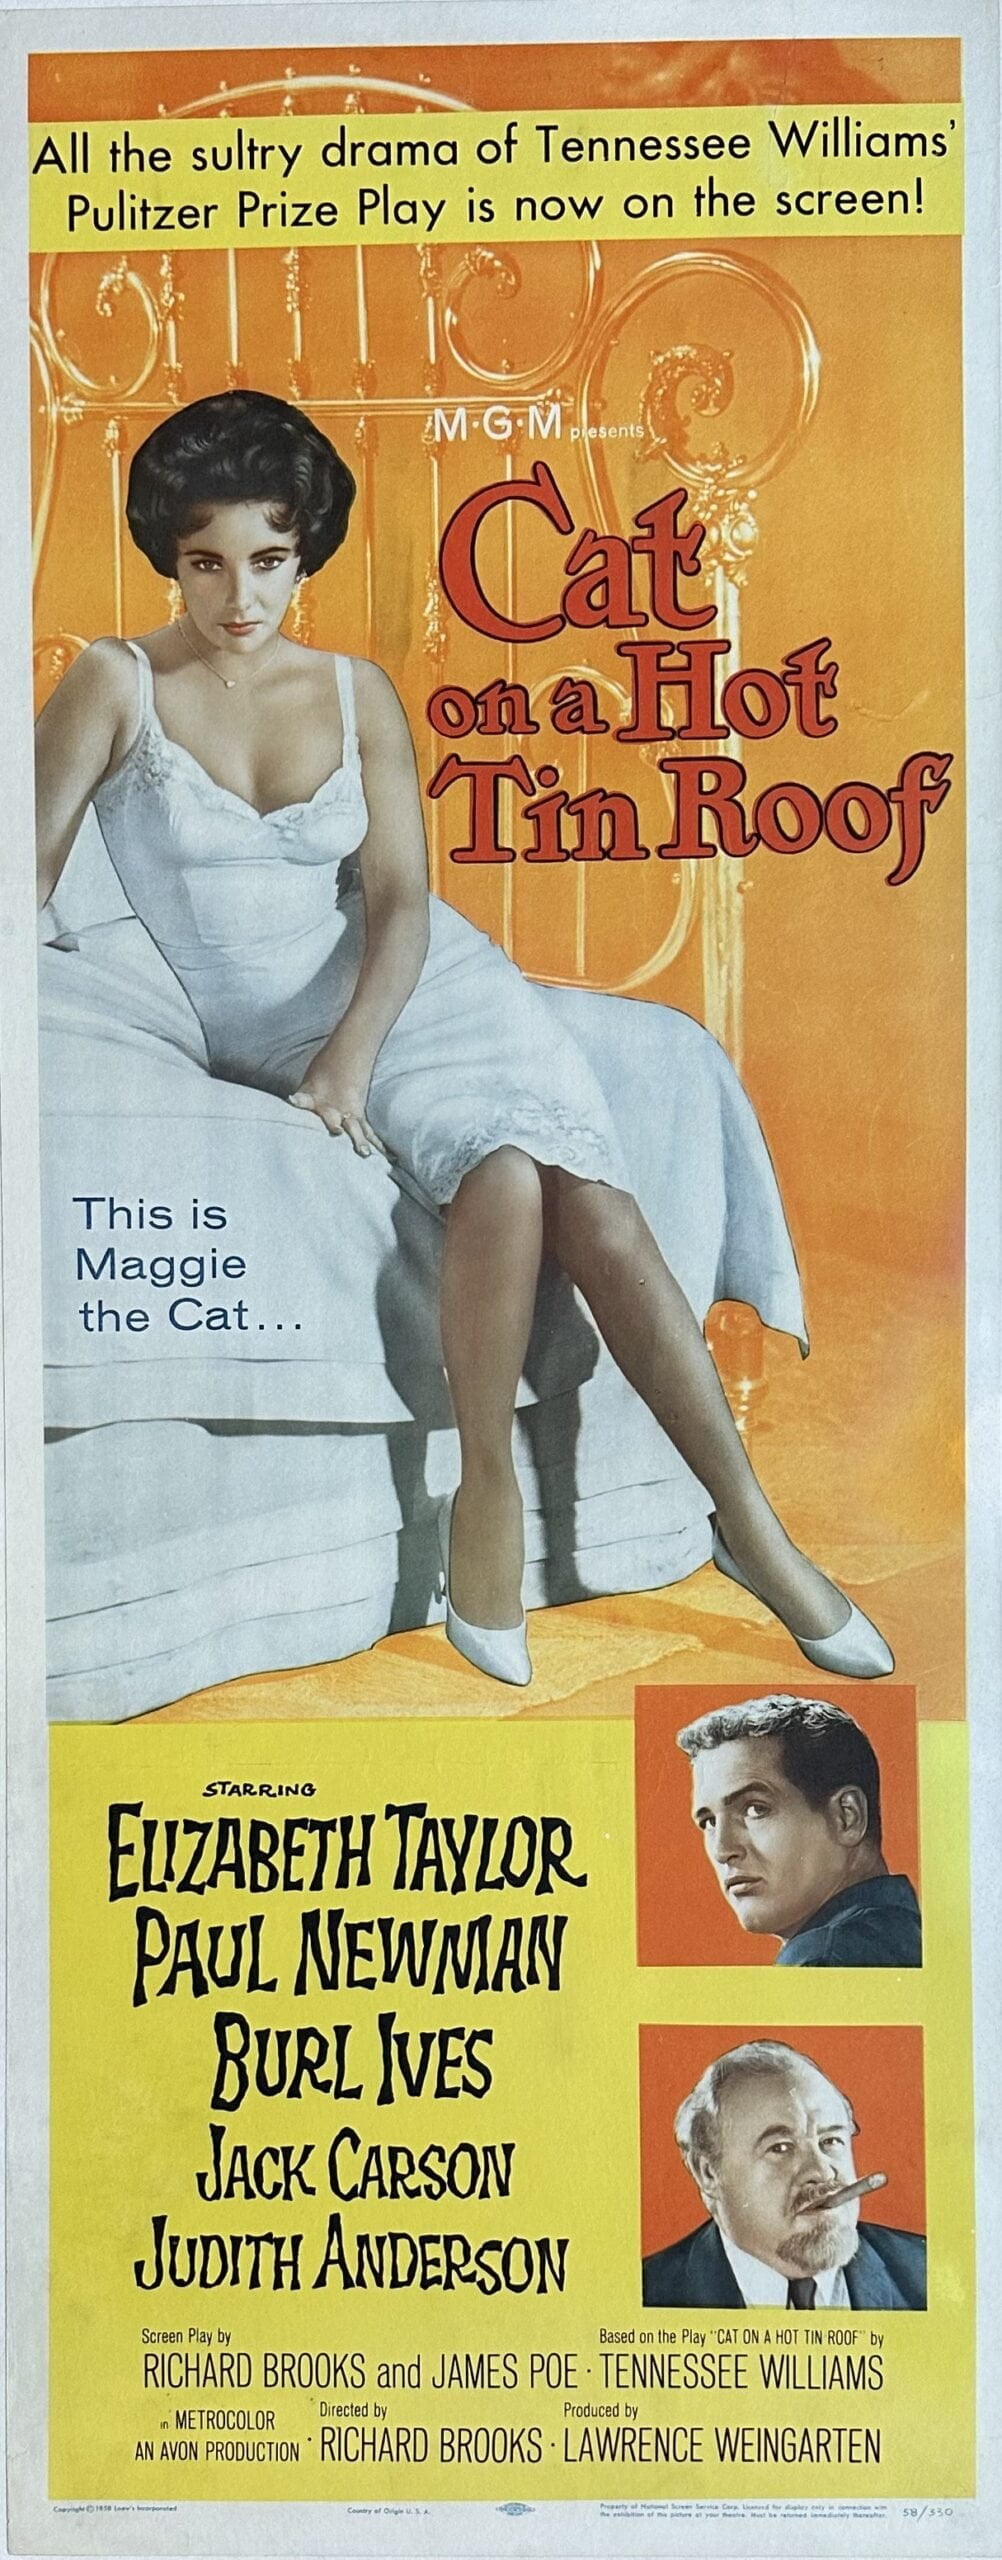 Original vintage cinema movie poster for Cat on a Hot Tin Roof, starring Elizabeth Taylor